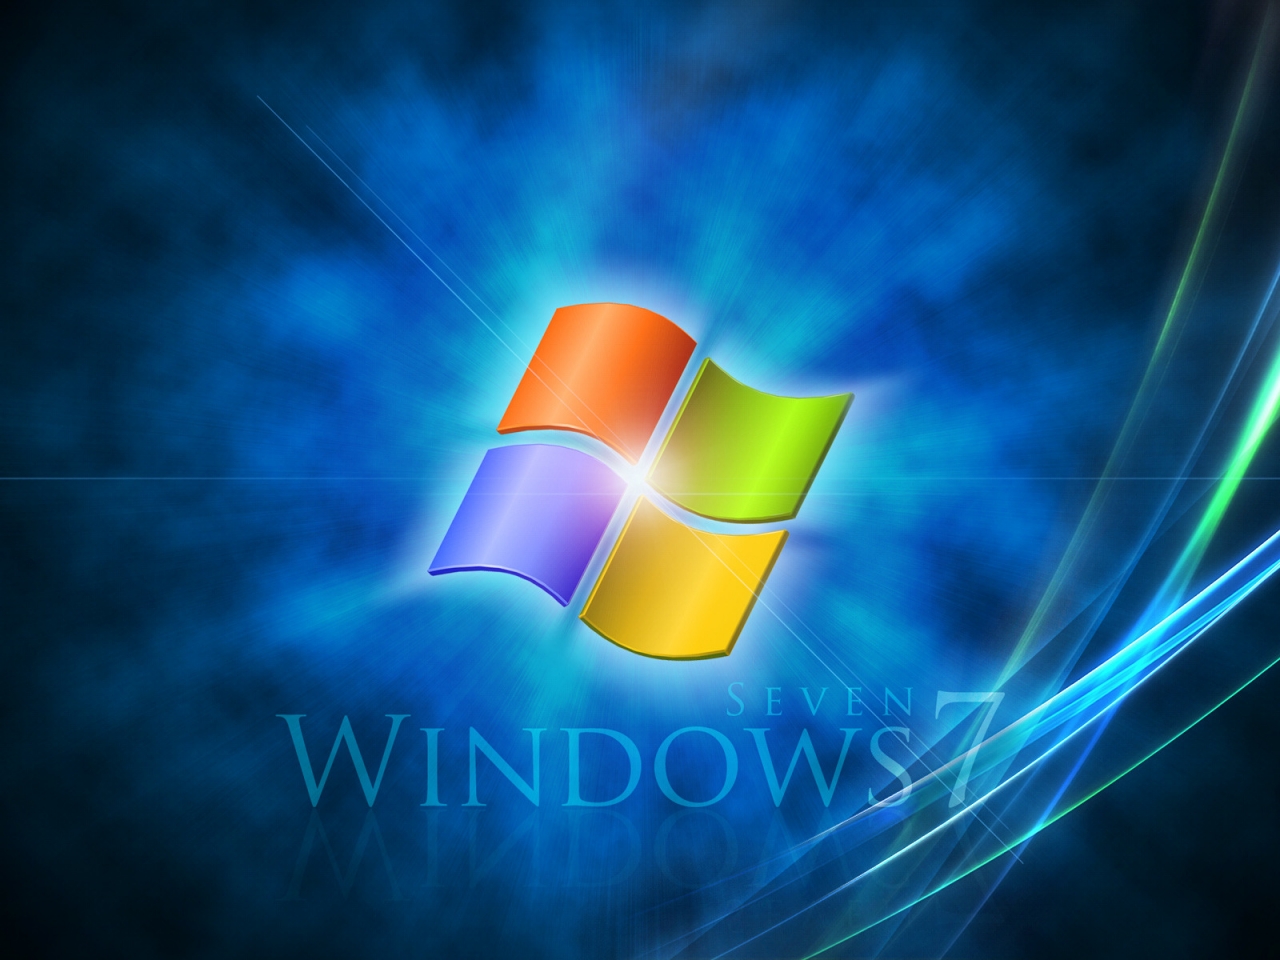 Windows 7 Light Rays for 1280 x 960 resolution